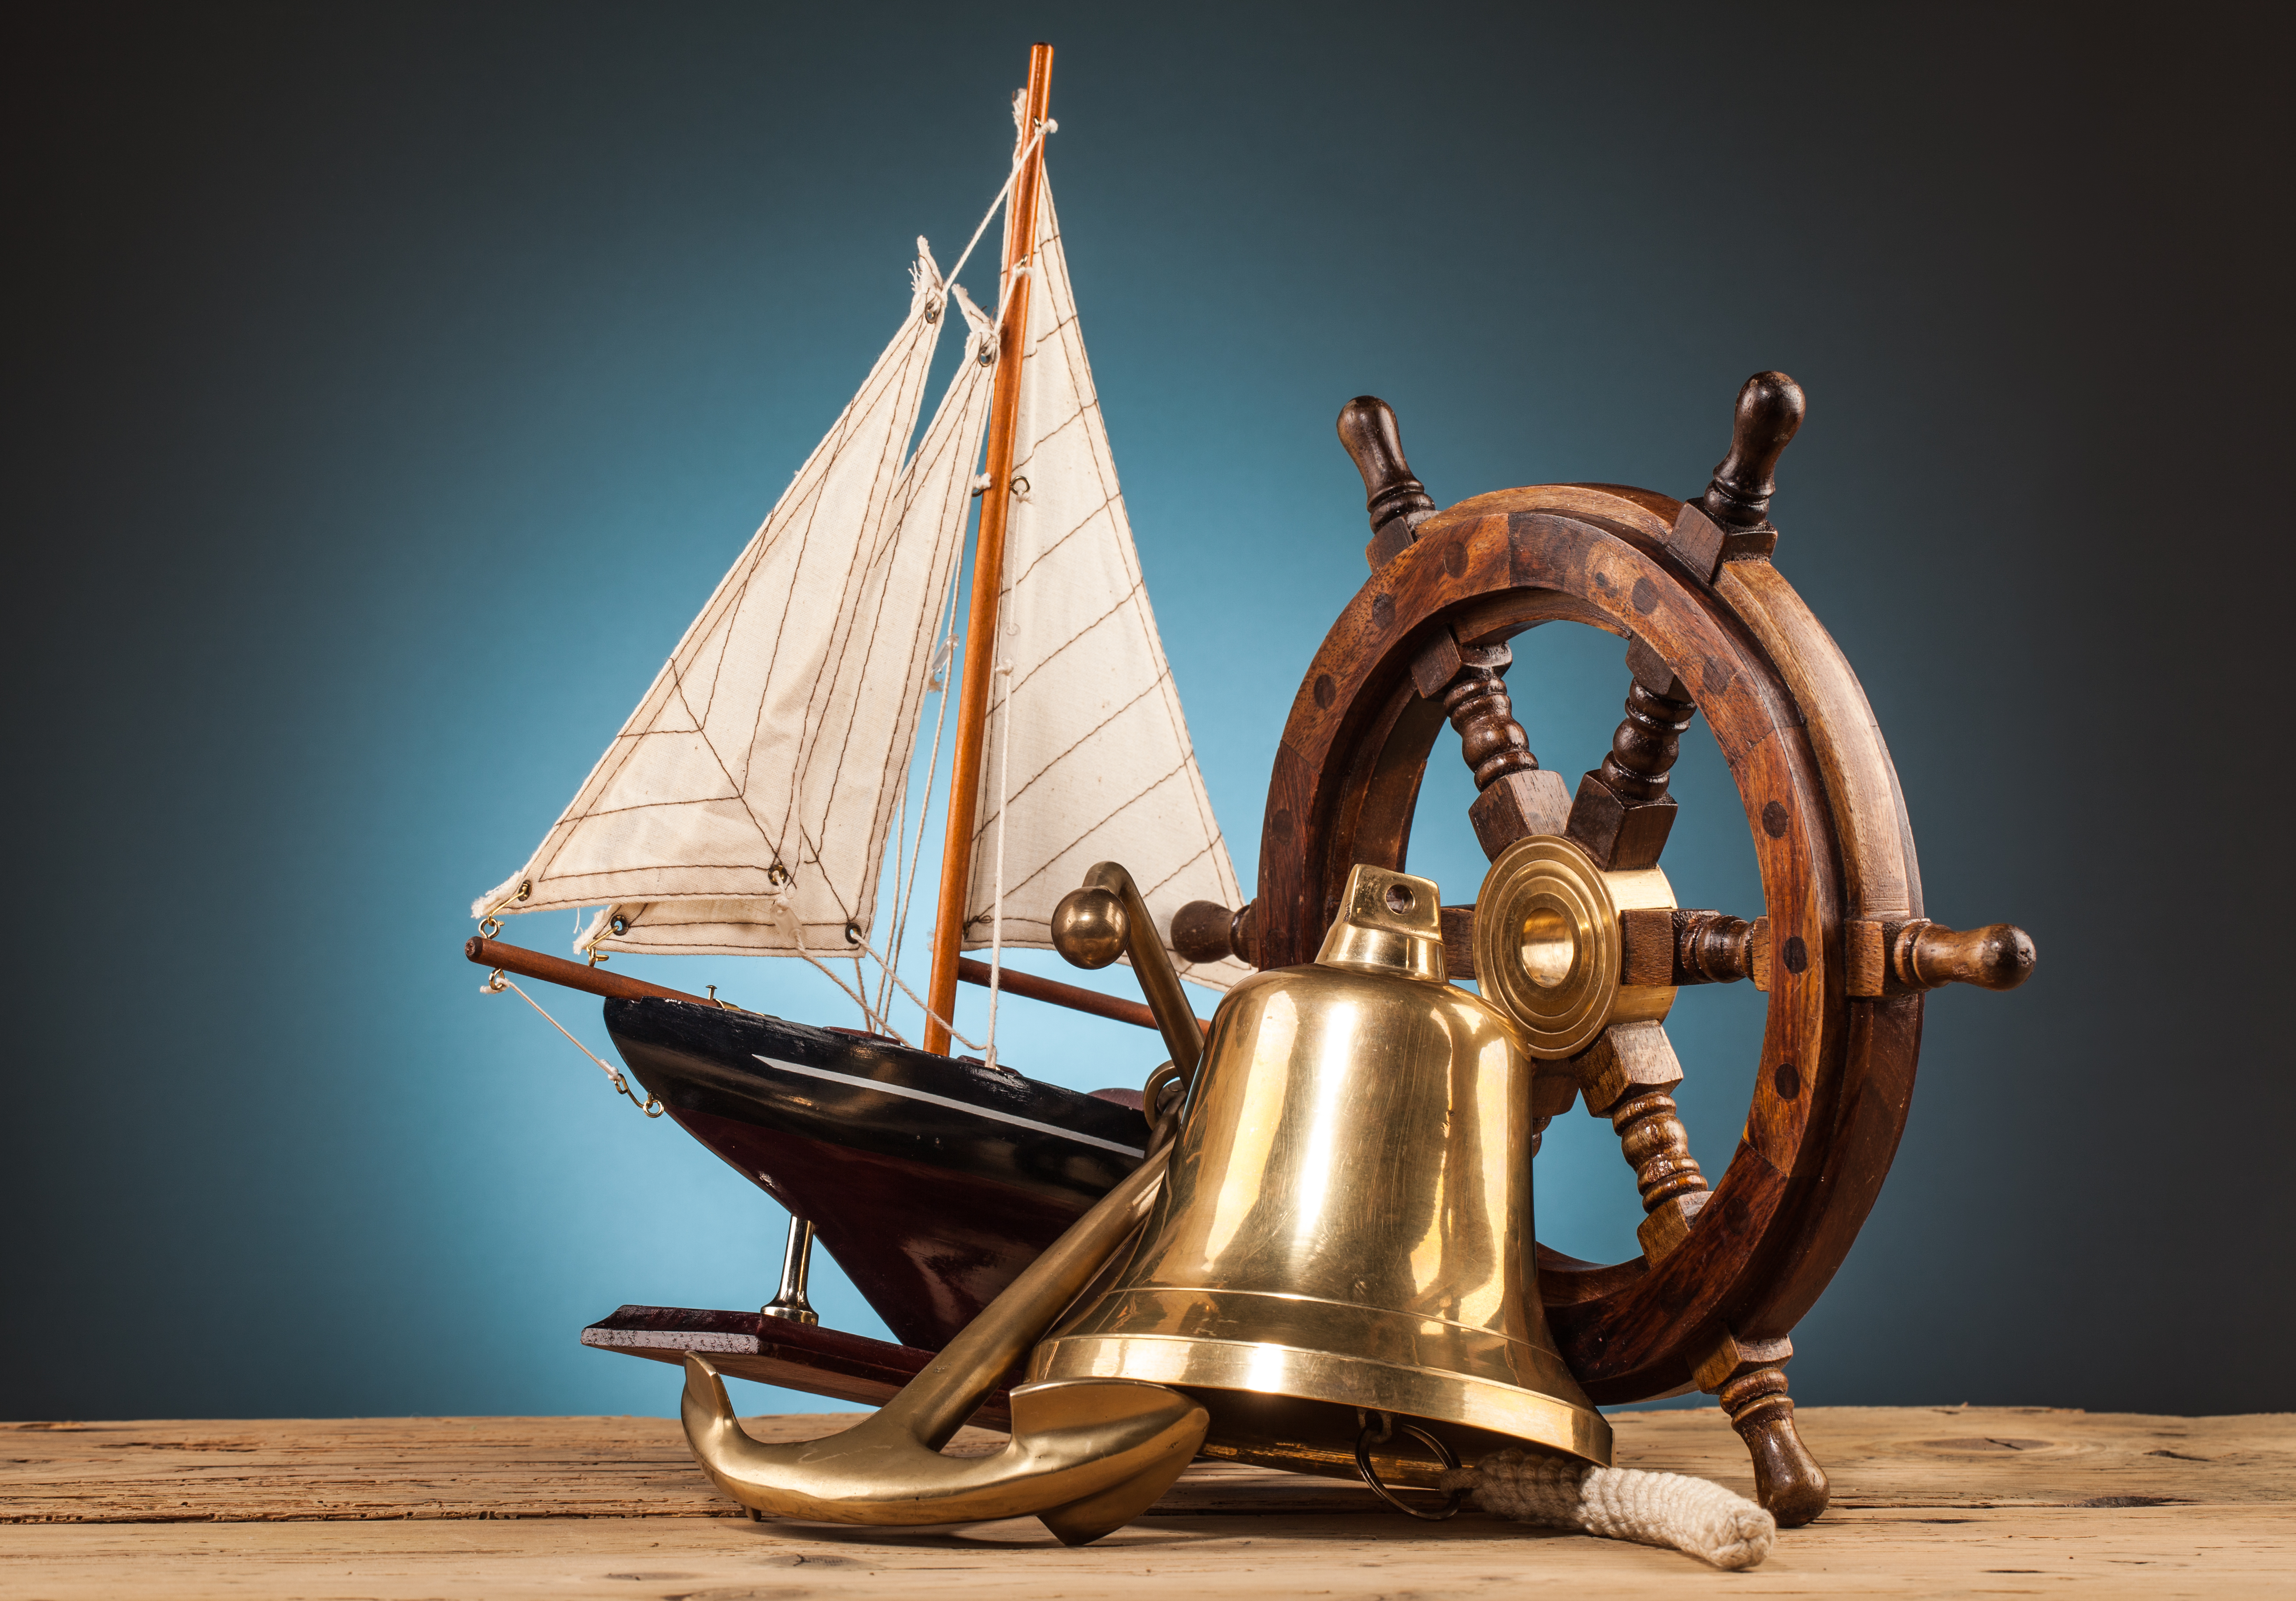 photography, still life, anchor, bell, boat